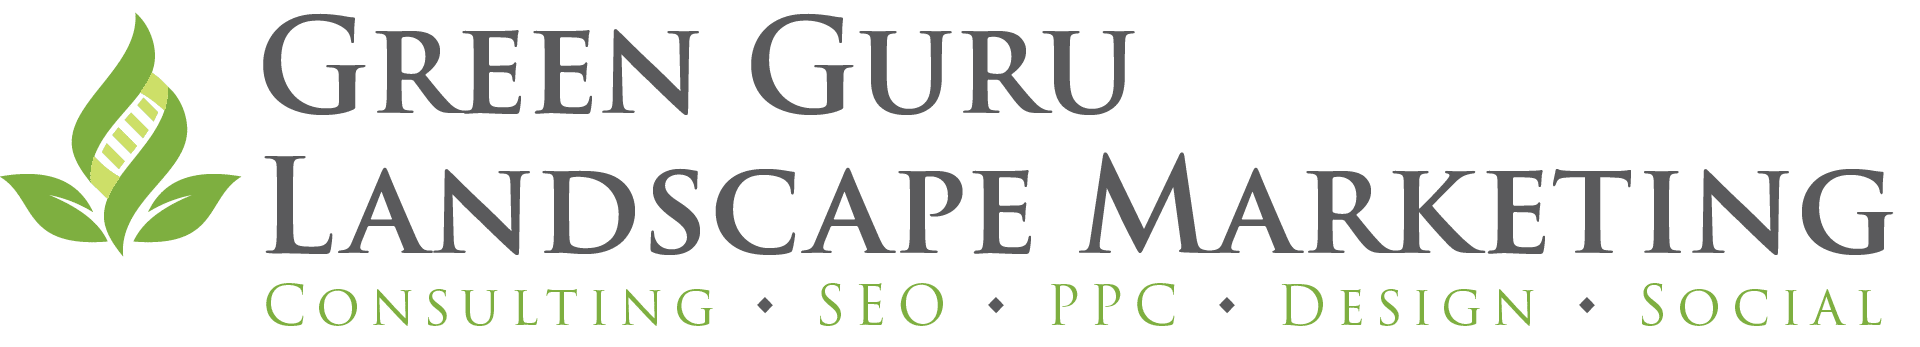 Green Guru Landscape Marketing